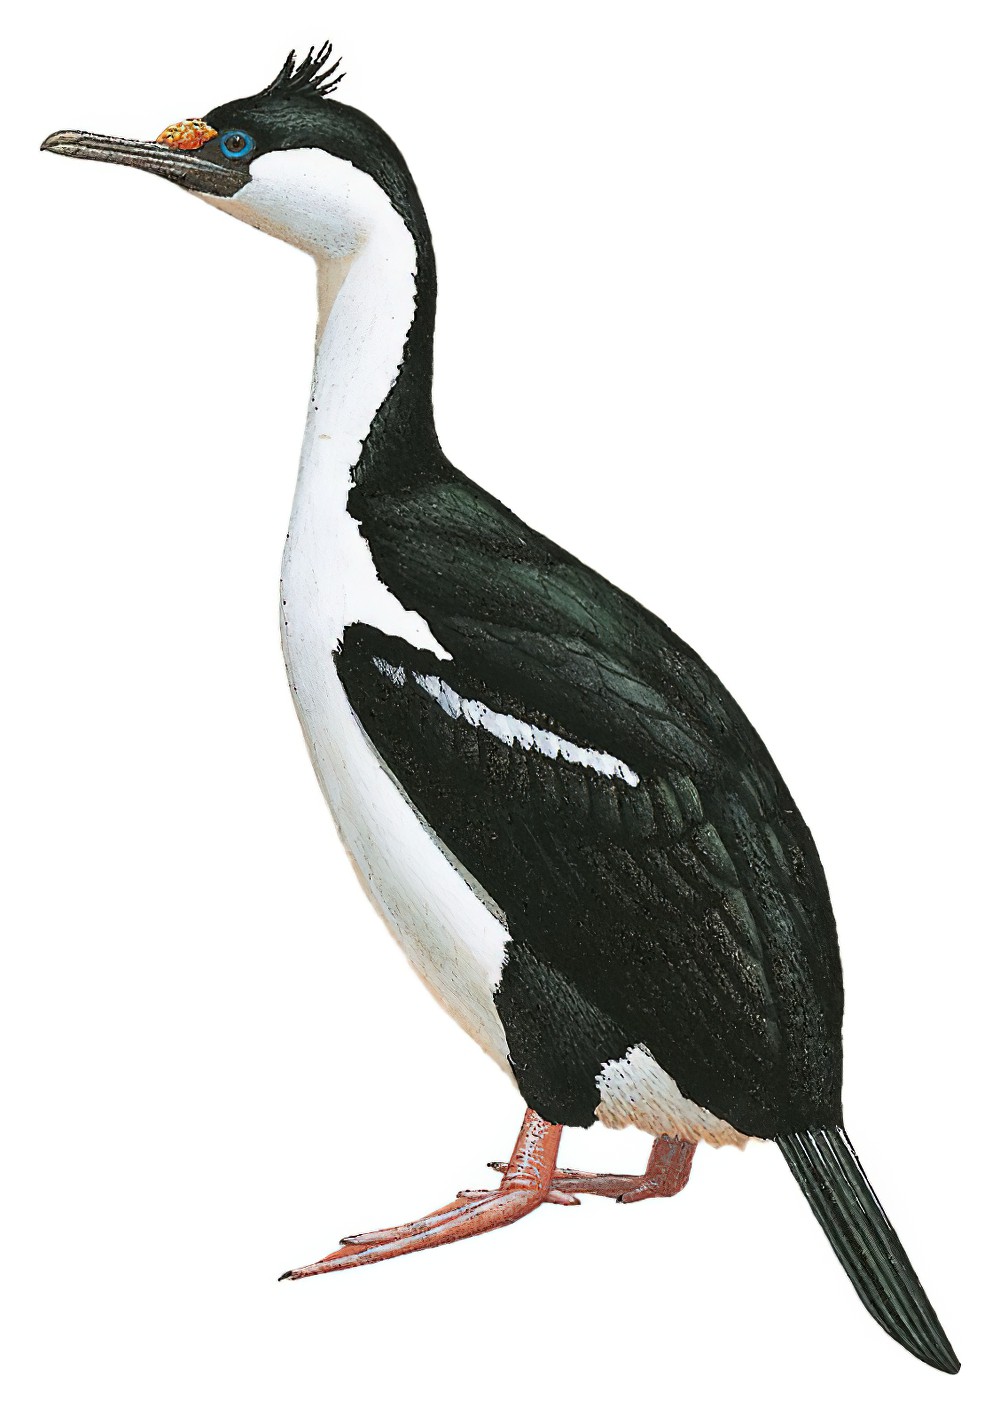 Antarctic Shag / Phalacrocorax bransfieldensis